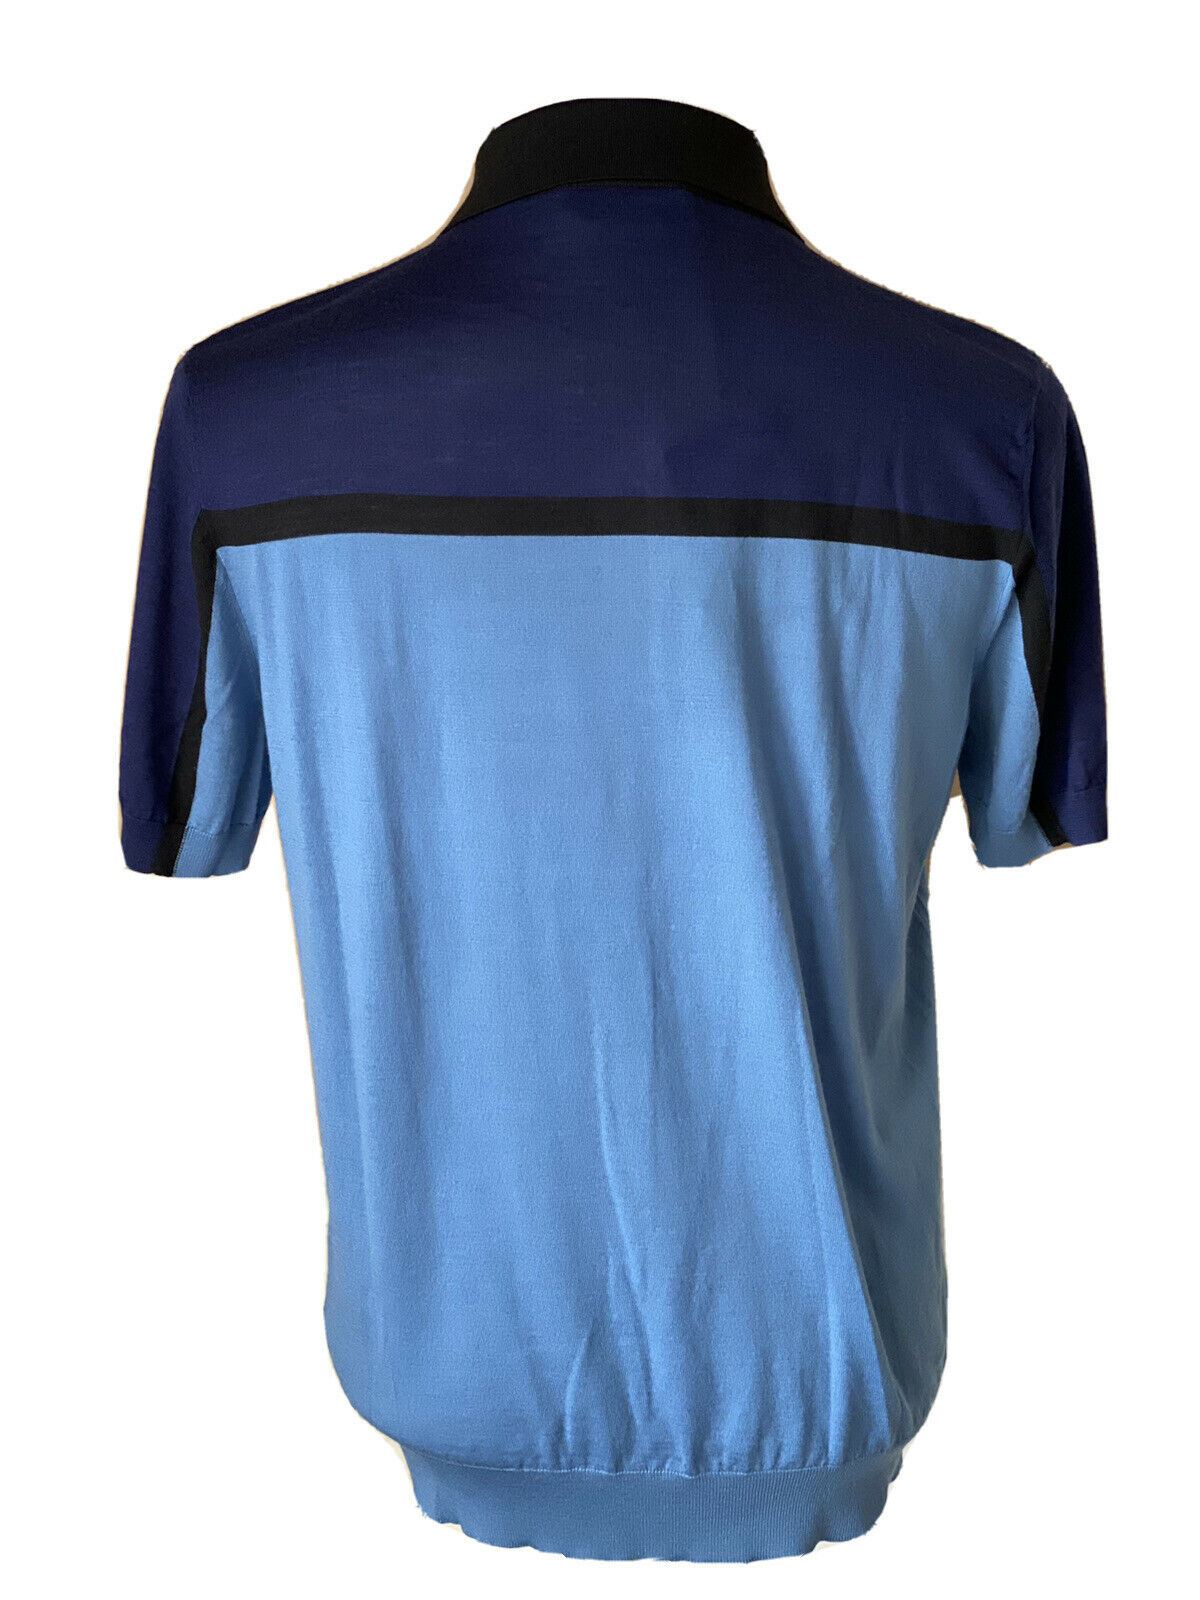 Neu mit Etikett: 980 $ Prada Kurzarm-Poloshirt aus Wolle in Blau UMA950 Hergestellt in Italien